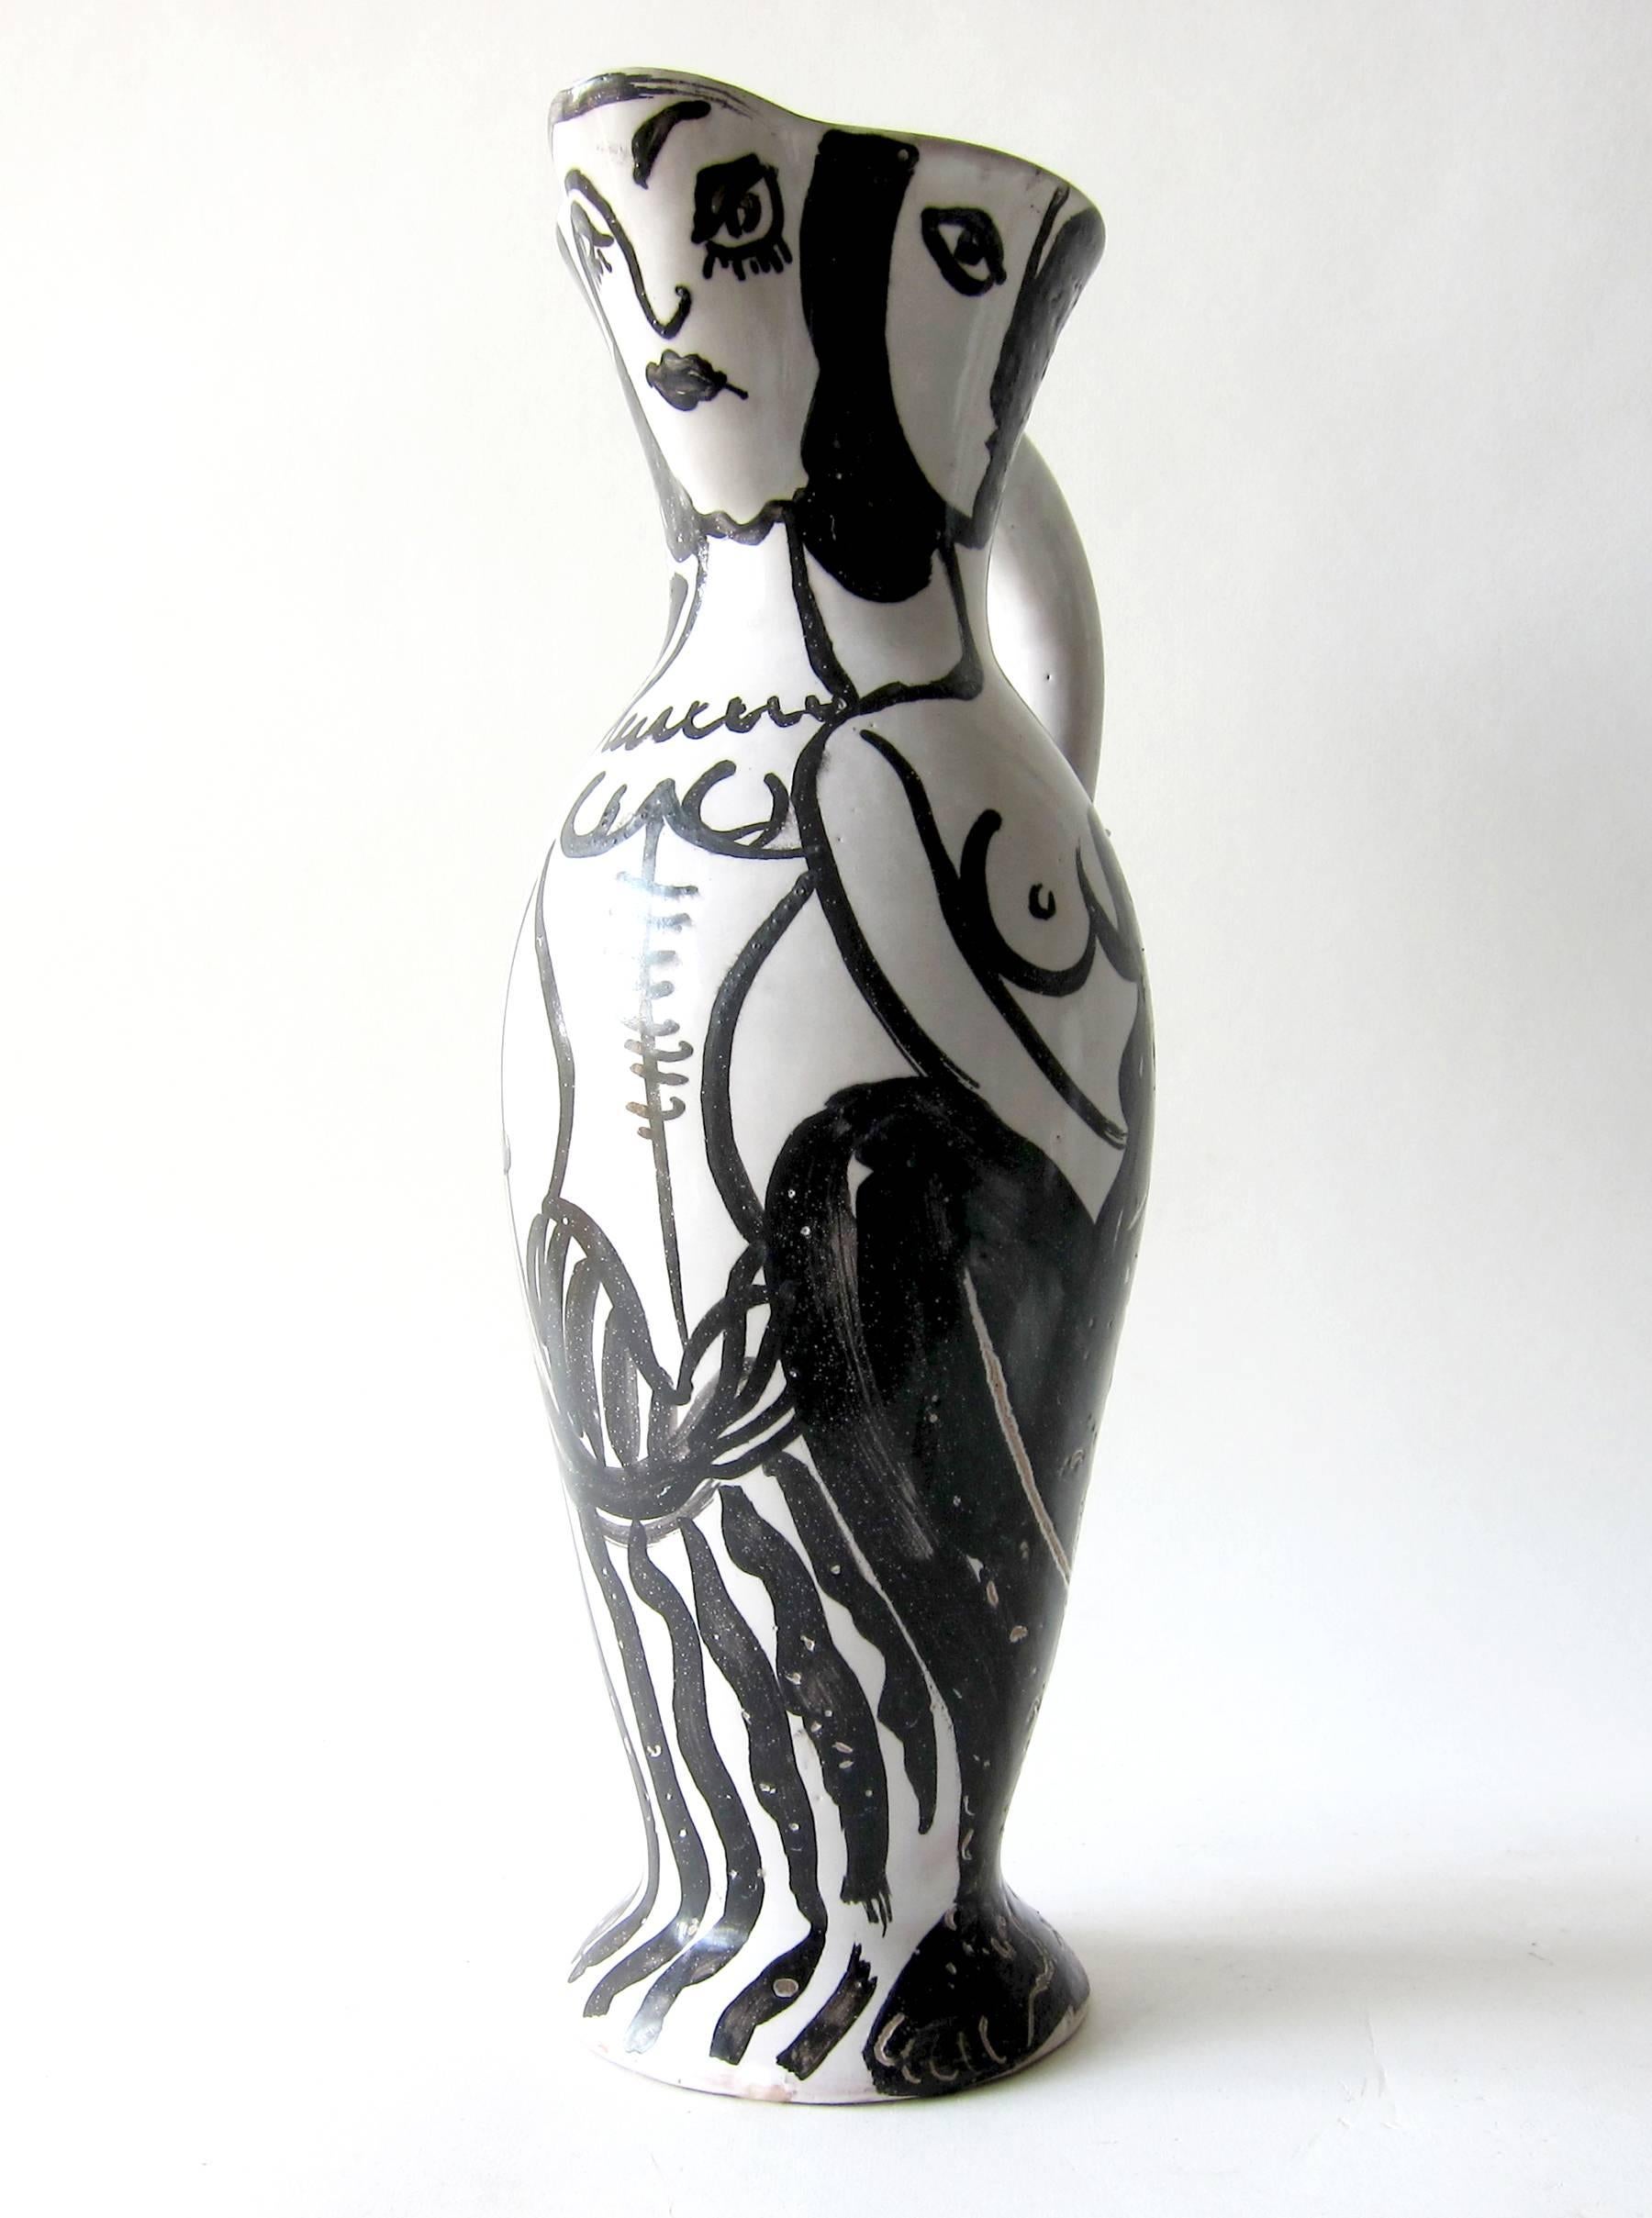 French modernist ceramic pitcher by Ljuba Naumovitch, a Serbian painter. Ljuba and wife Odette Roche (Naumovitch) opened the Atelier 